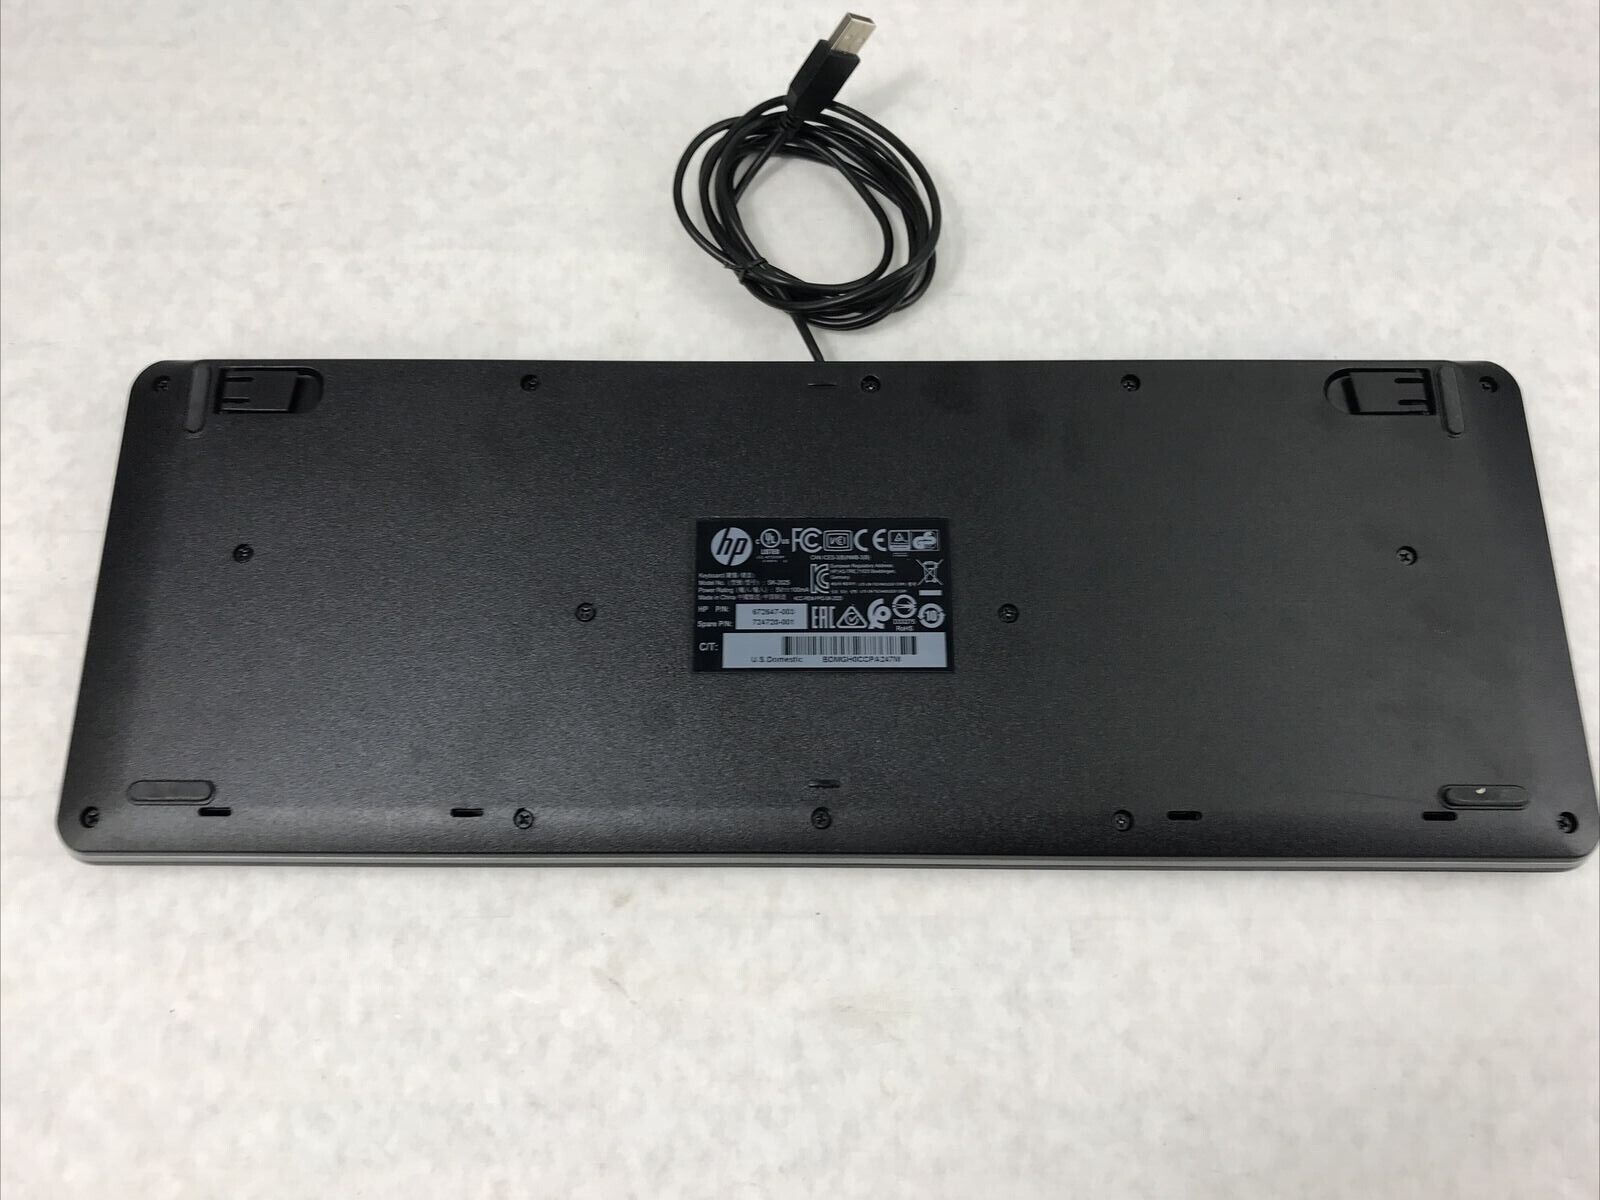 HP 672647-003 KU-1156 Black Wired Standard USB Desktop Keyboard